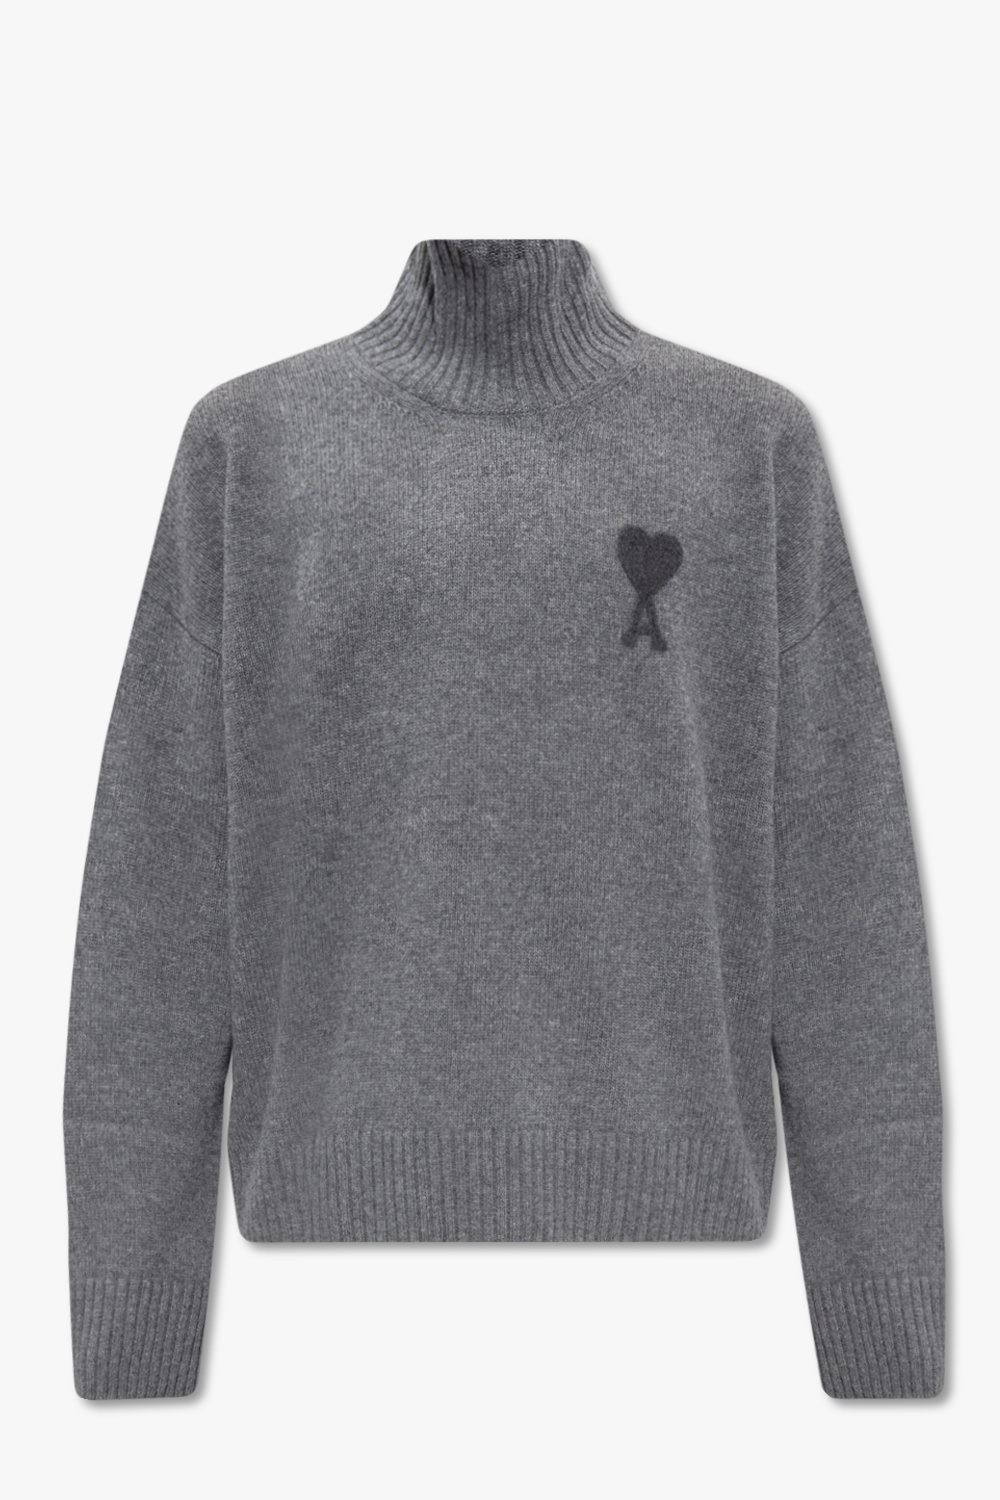 Ami Alexandre Mattiussi Turtleneck sweater sleeved with logo